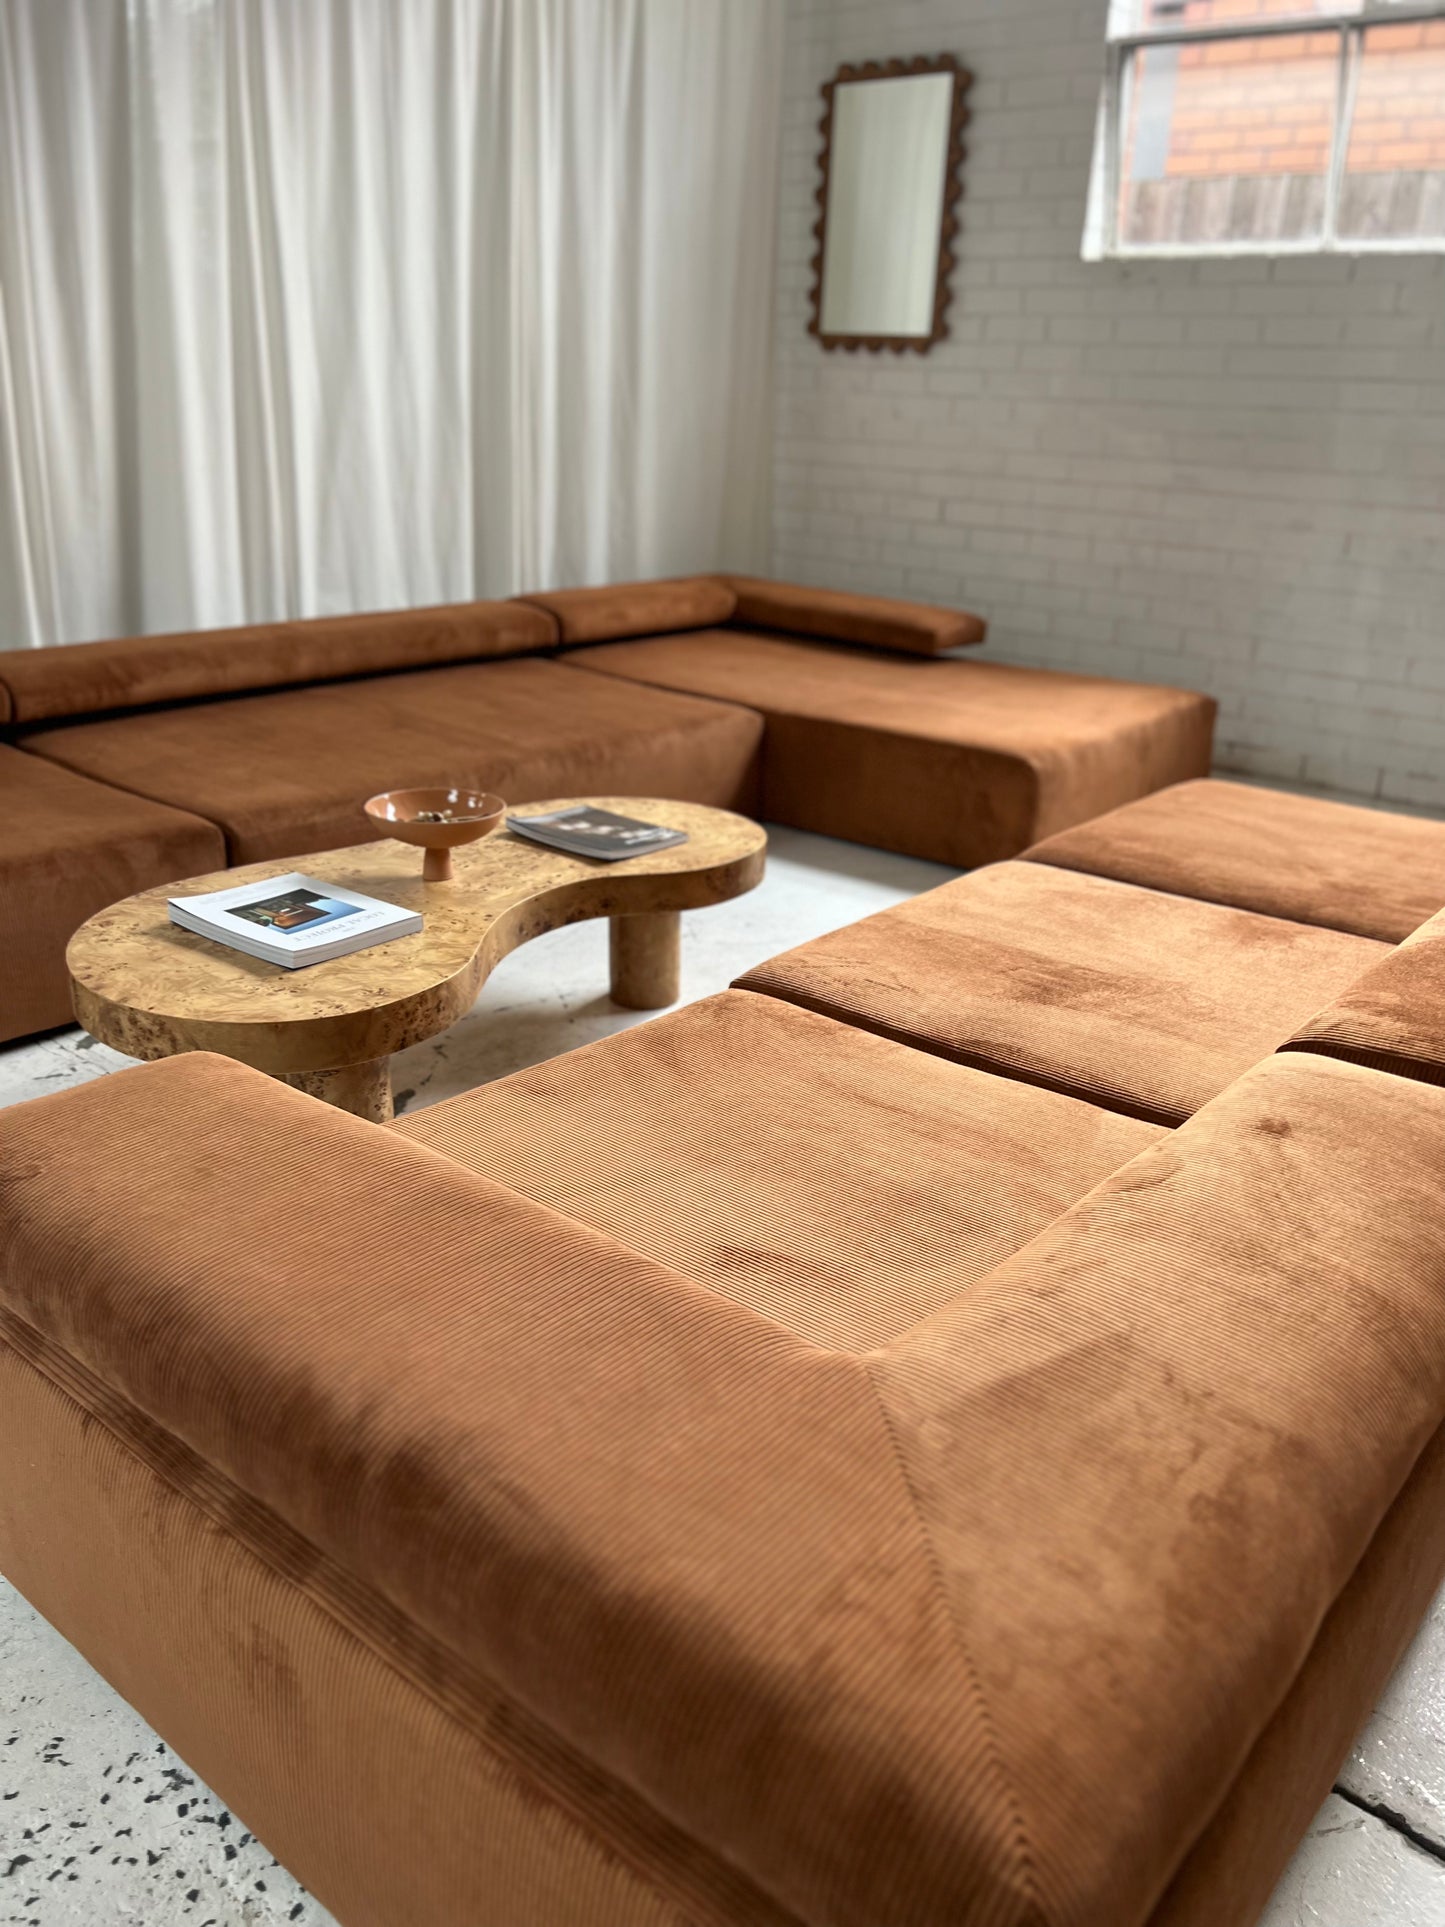 Large Corduroy Modular Sofa